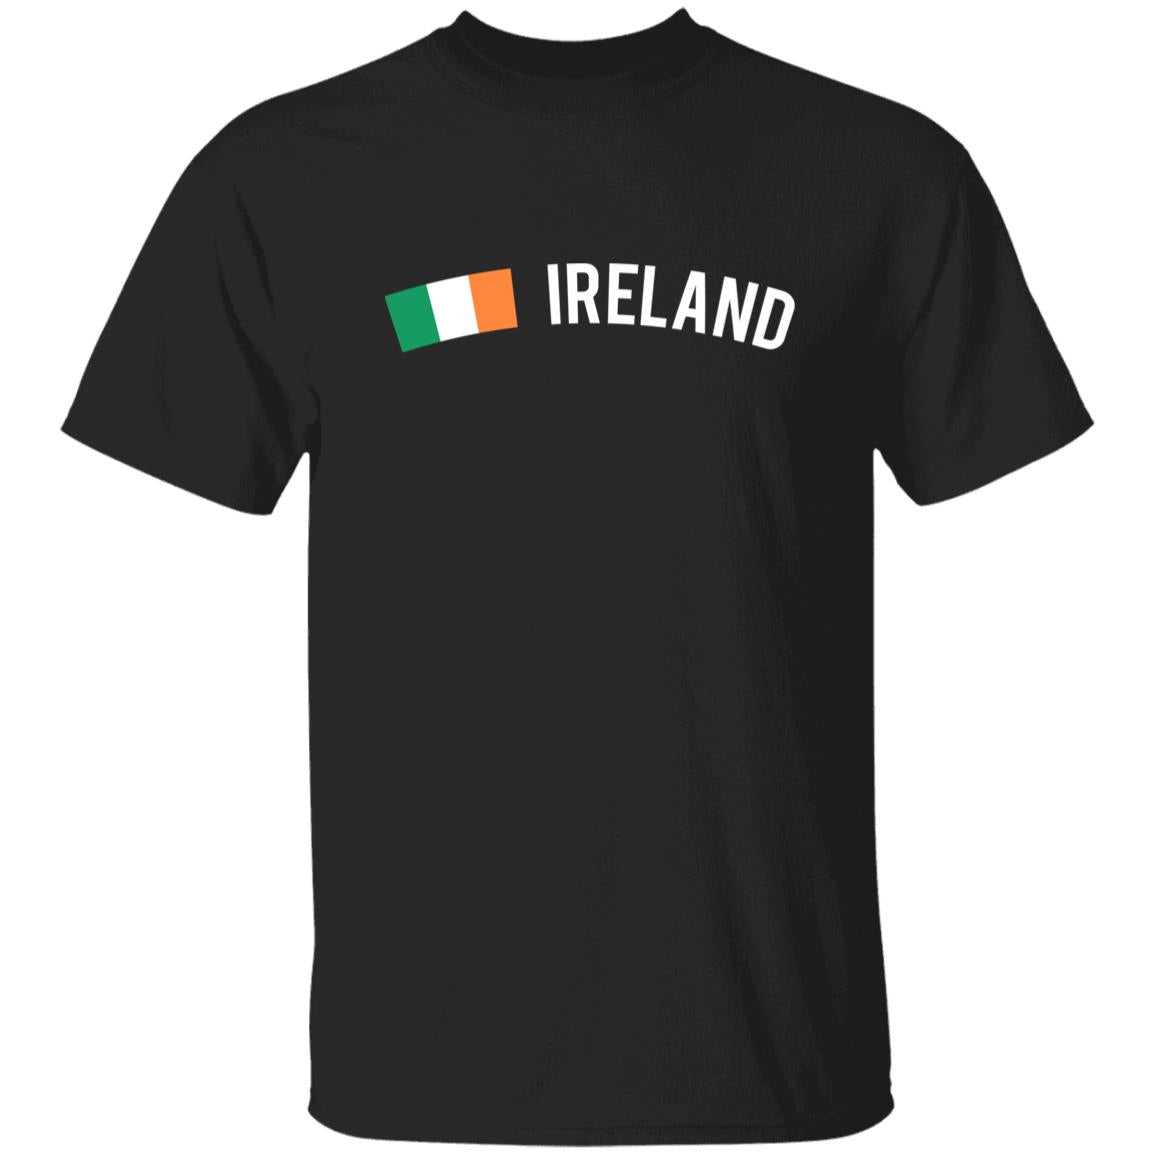 Ireland Unisex T-shirt gift Irish flag tee Dublin White Black Dark Heather-Family-Gift-Planet